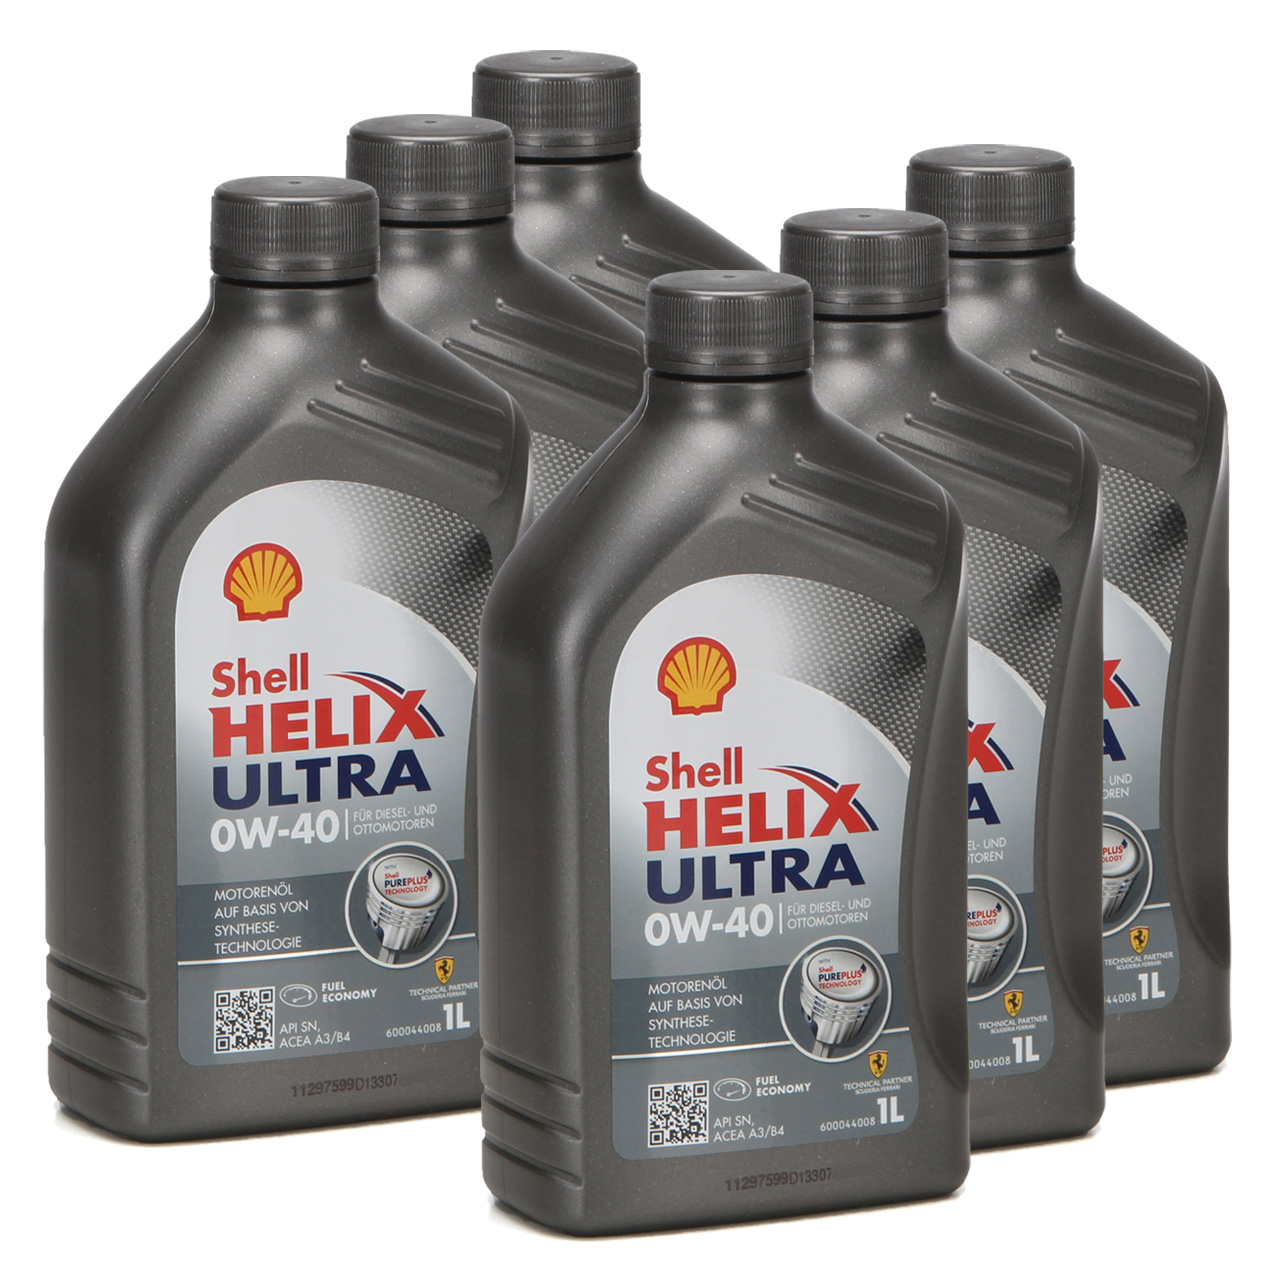 6x 1 Liter SHELL HELIX ULTRA 0W-40 Motoröl Öl MB 229.5/226.5 VW 502.00/505.00